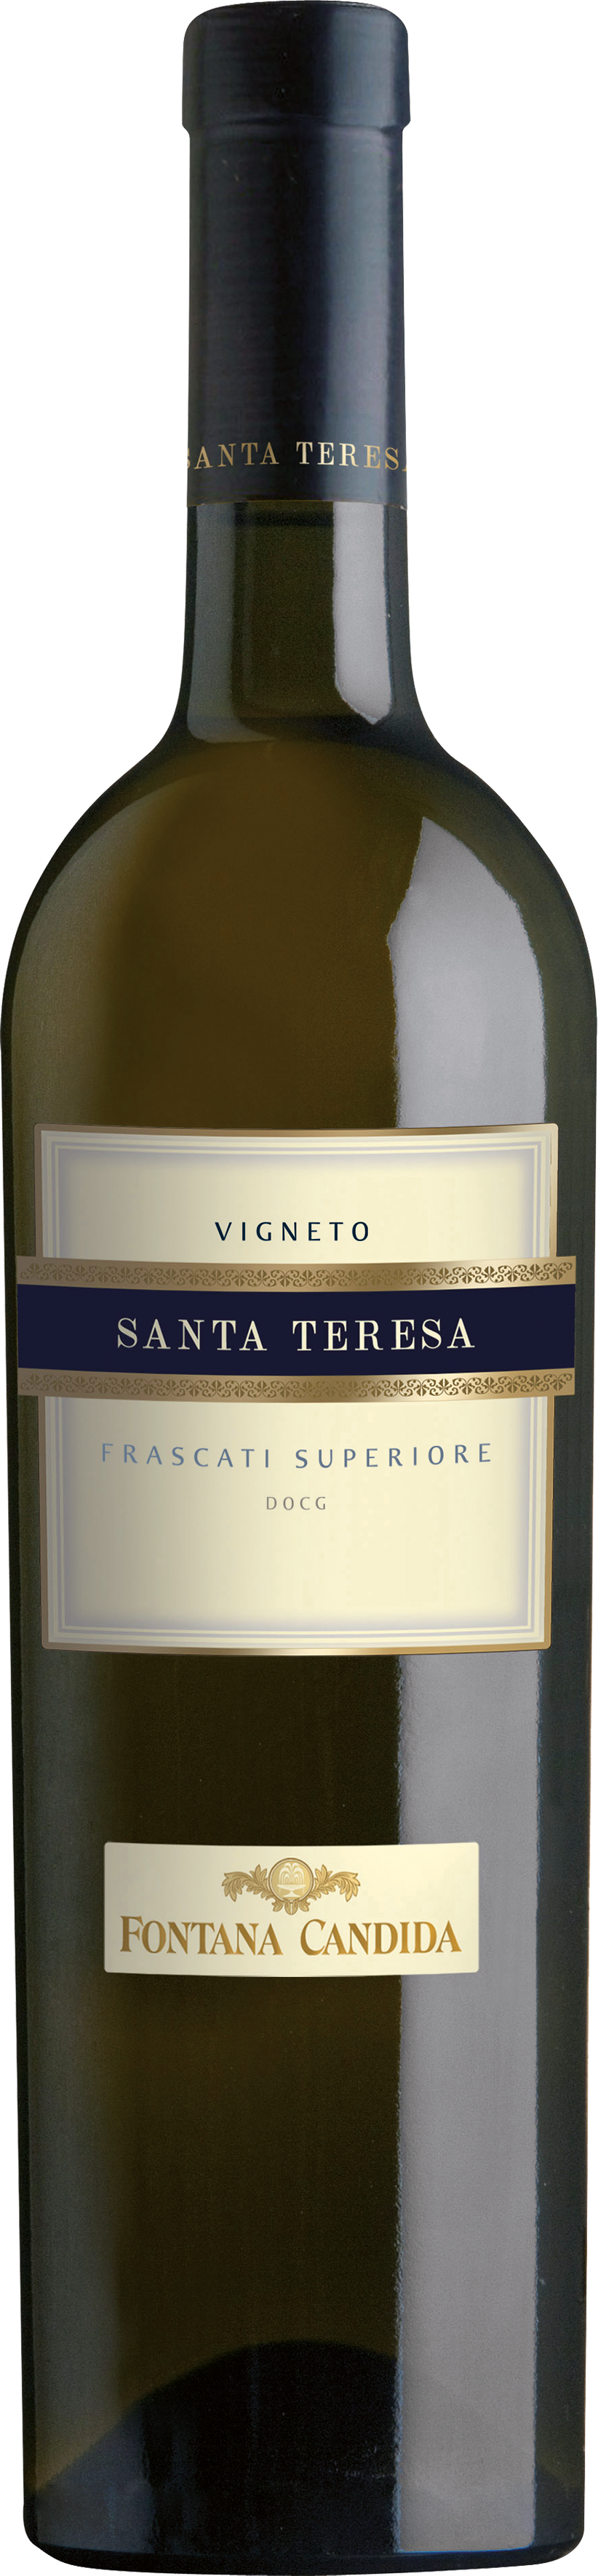 Vigneto-Santa-Teresa-Frascati-SuperioreUkTut7DejfXCF